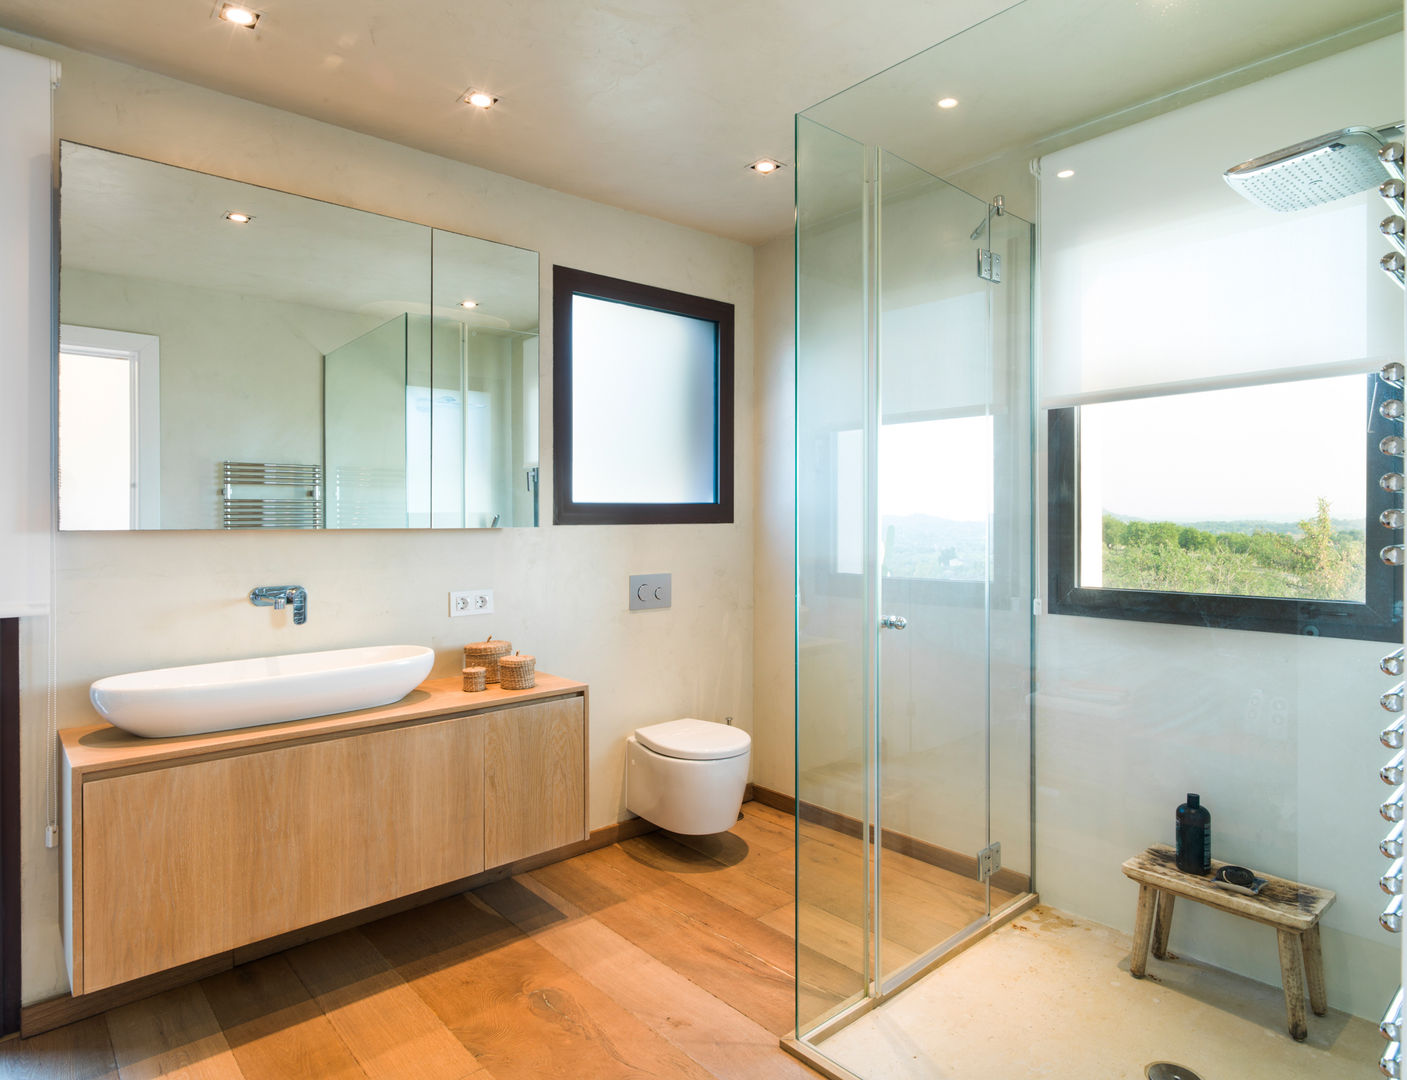 baño suite margarotger interiorisme Baños modernos